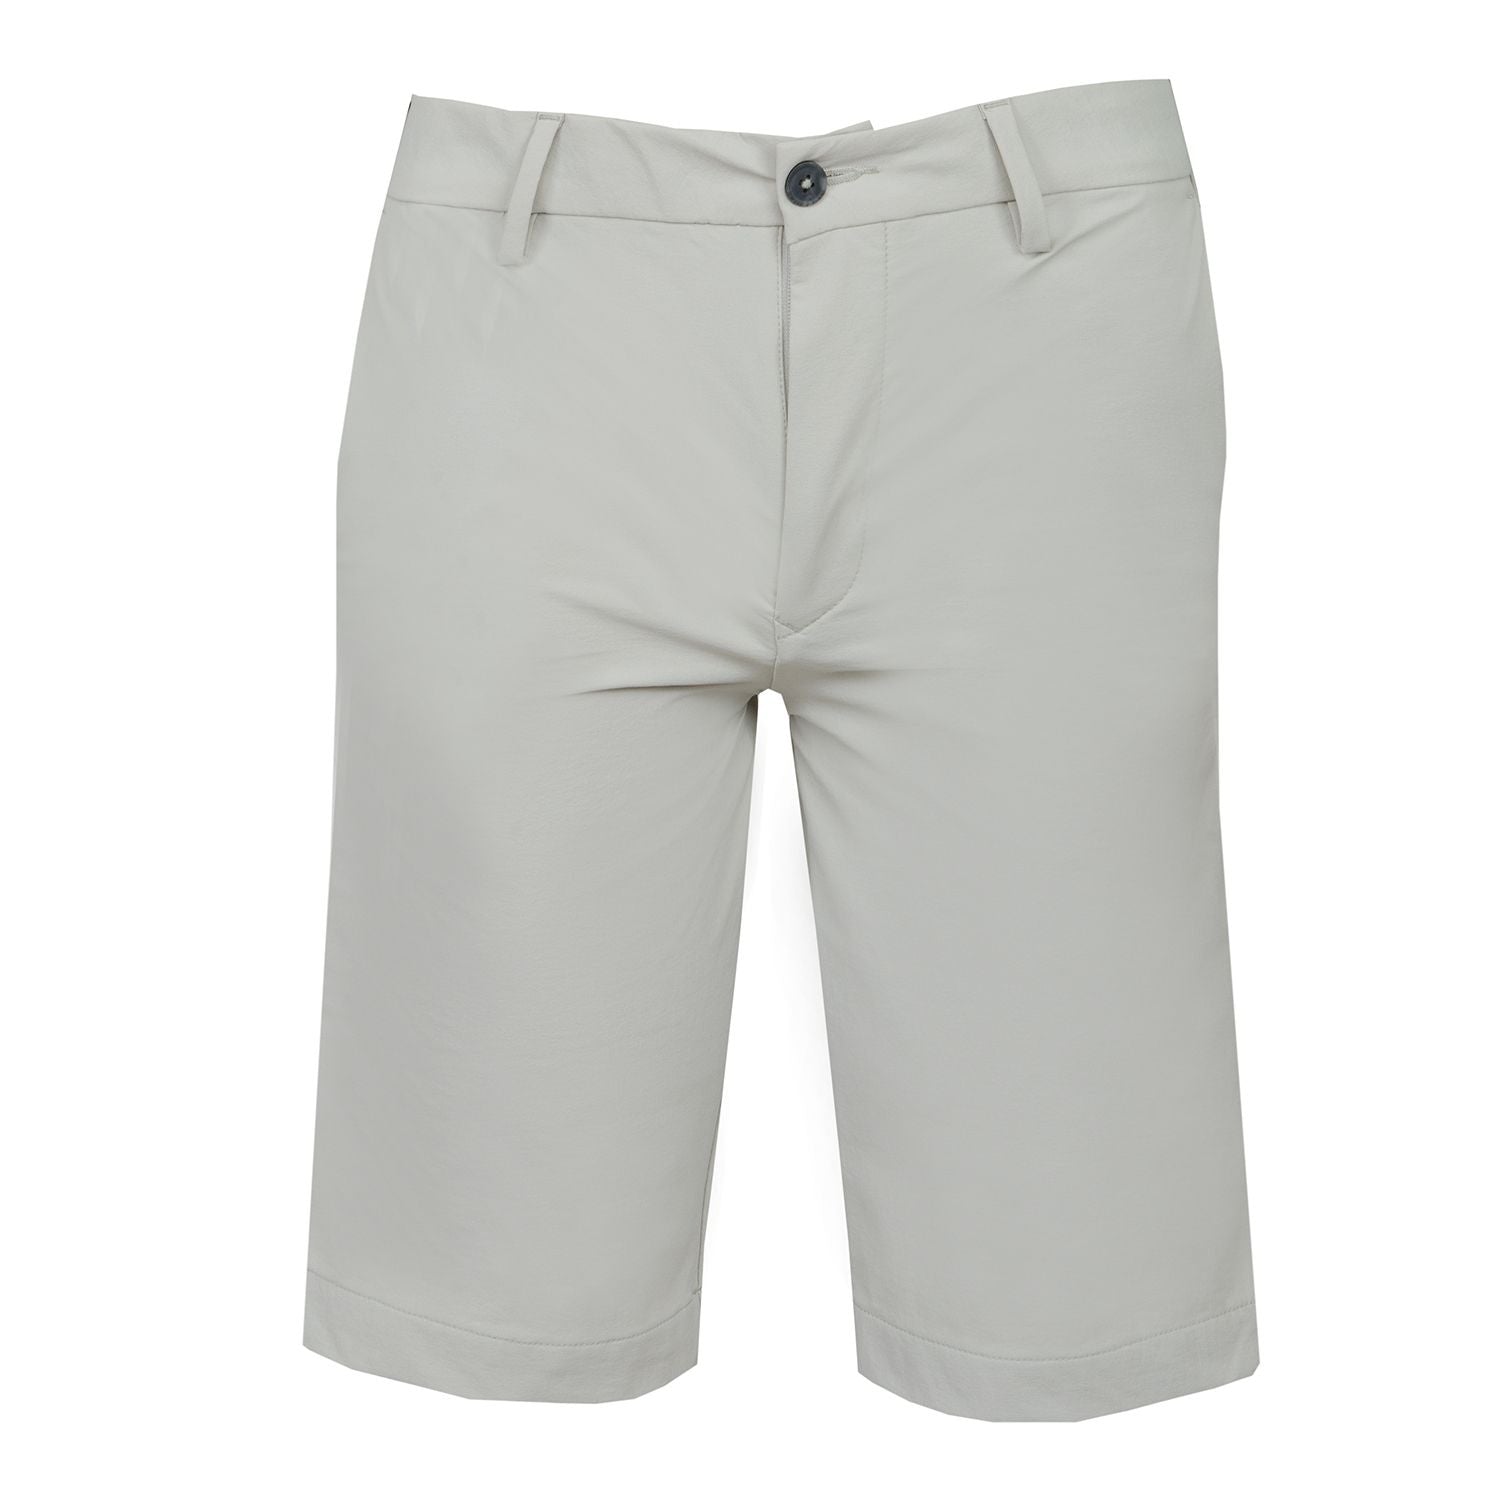 Junior Golf Shorts - Grey